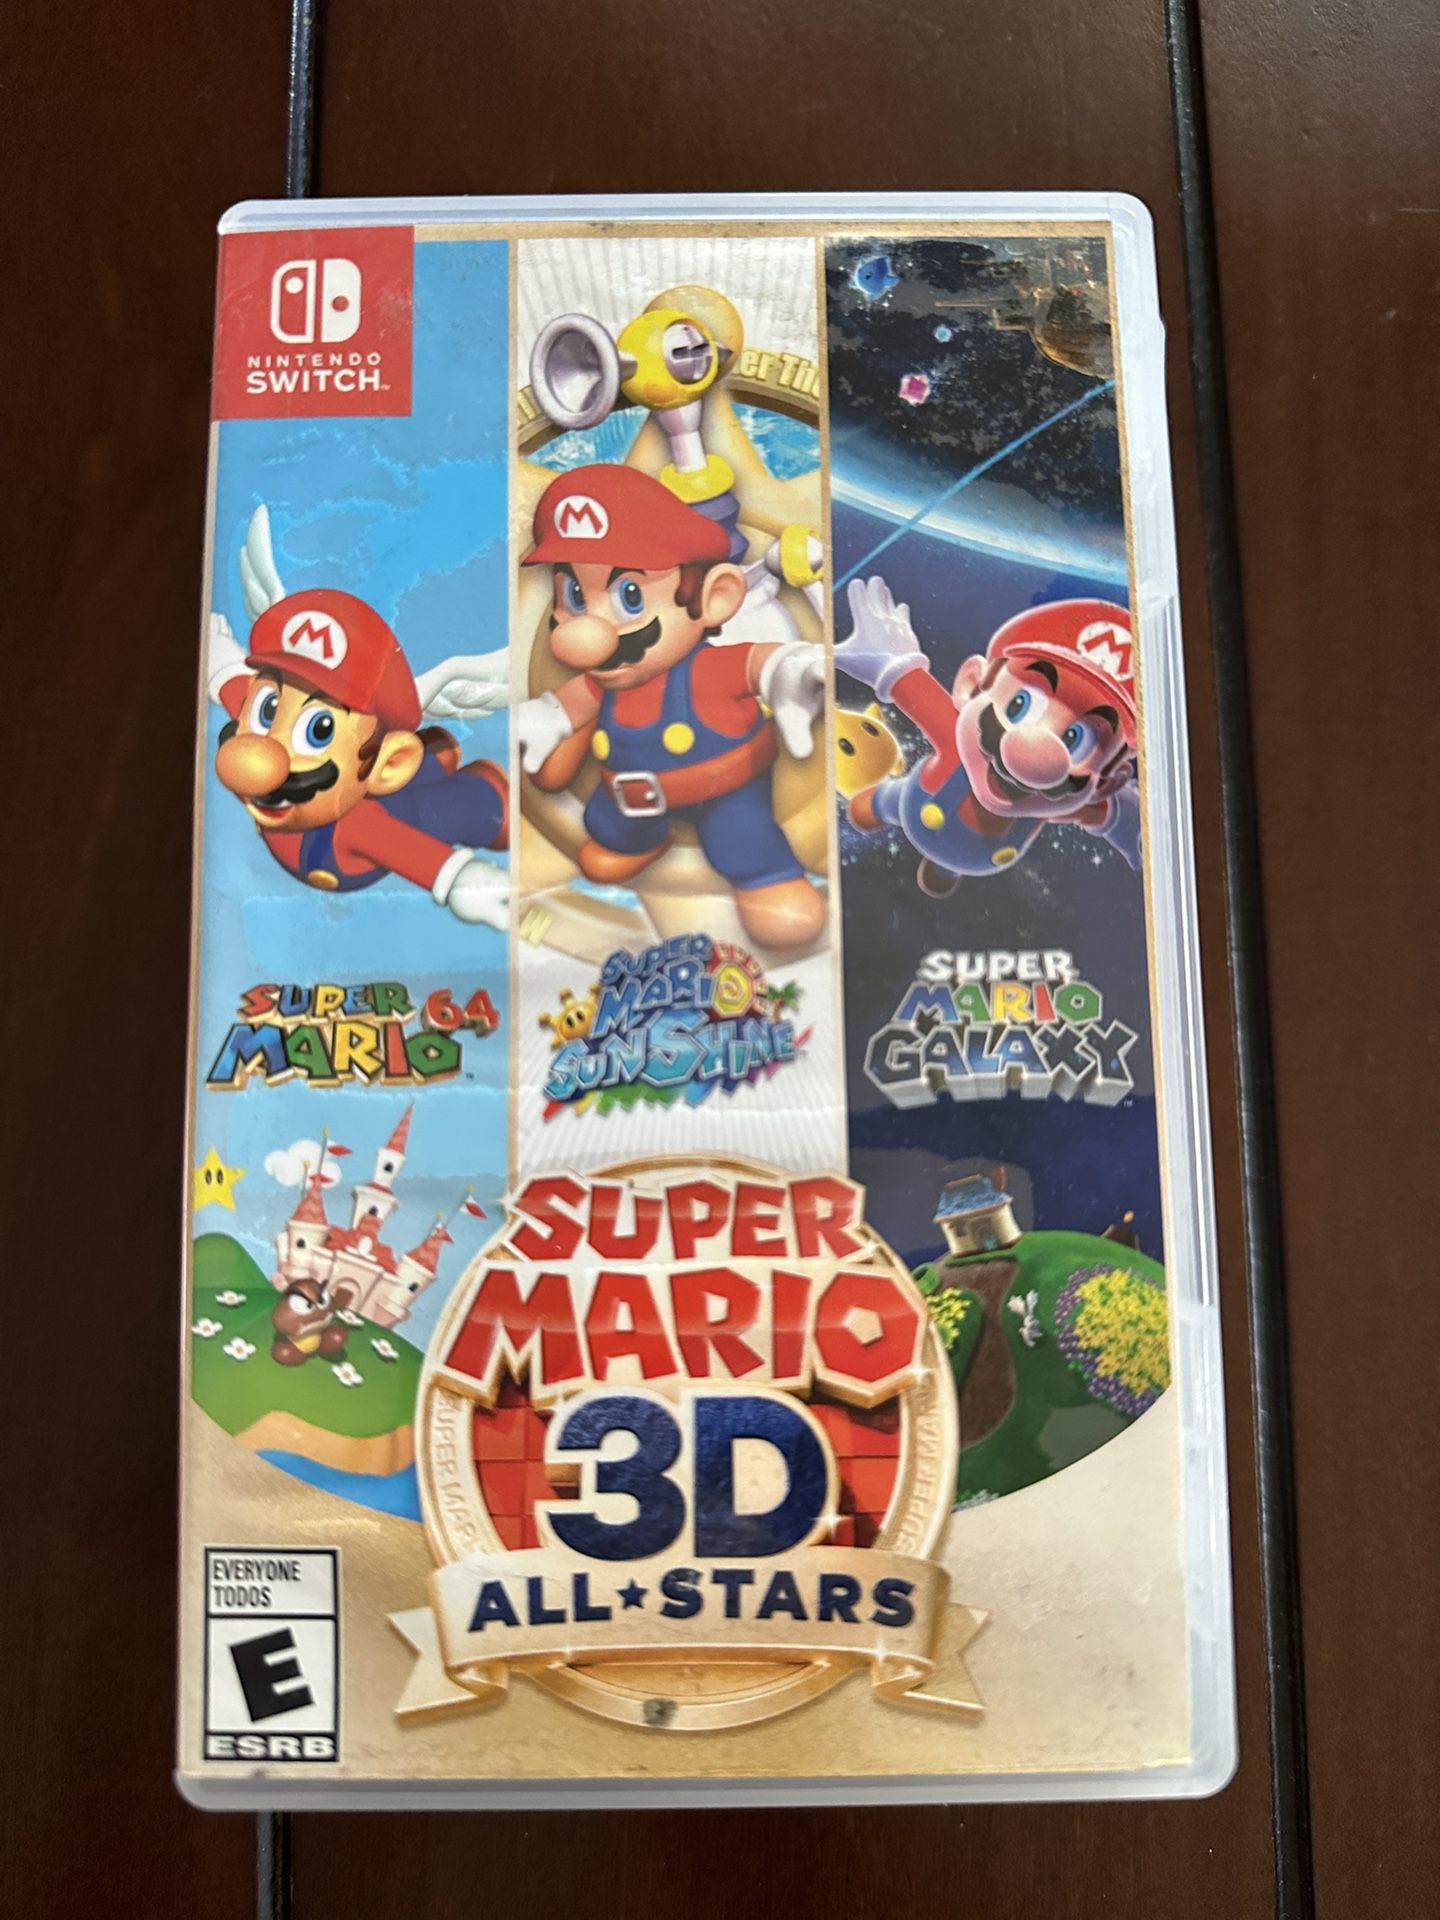 Super Mario 3D All-Stars “Nintendo switch”